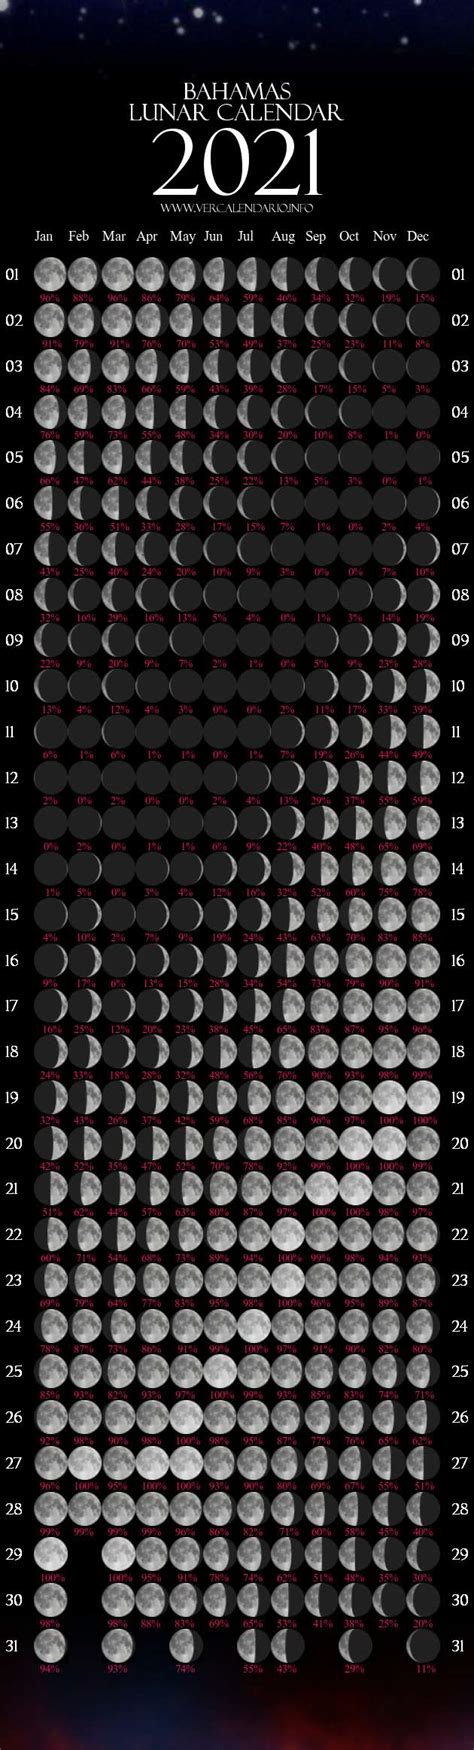 Lunar Calendar 2021 (Bahamas)